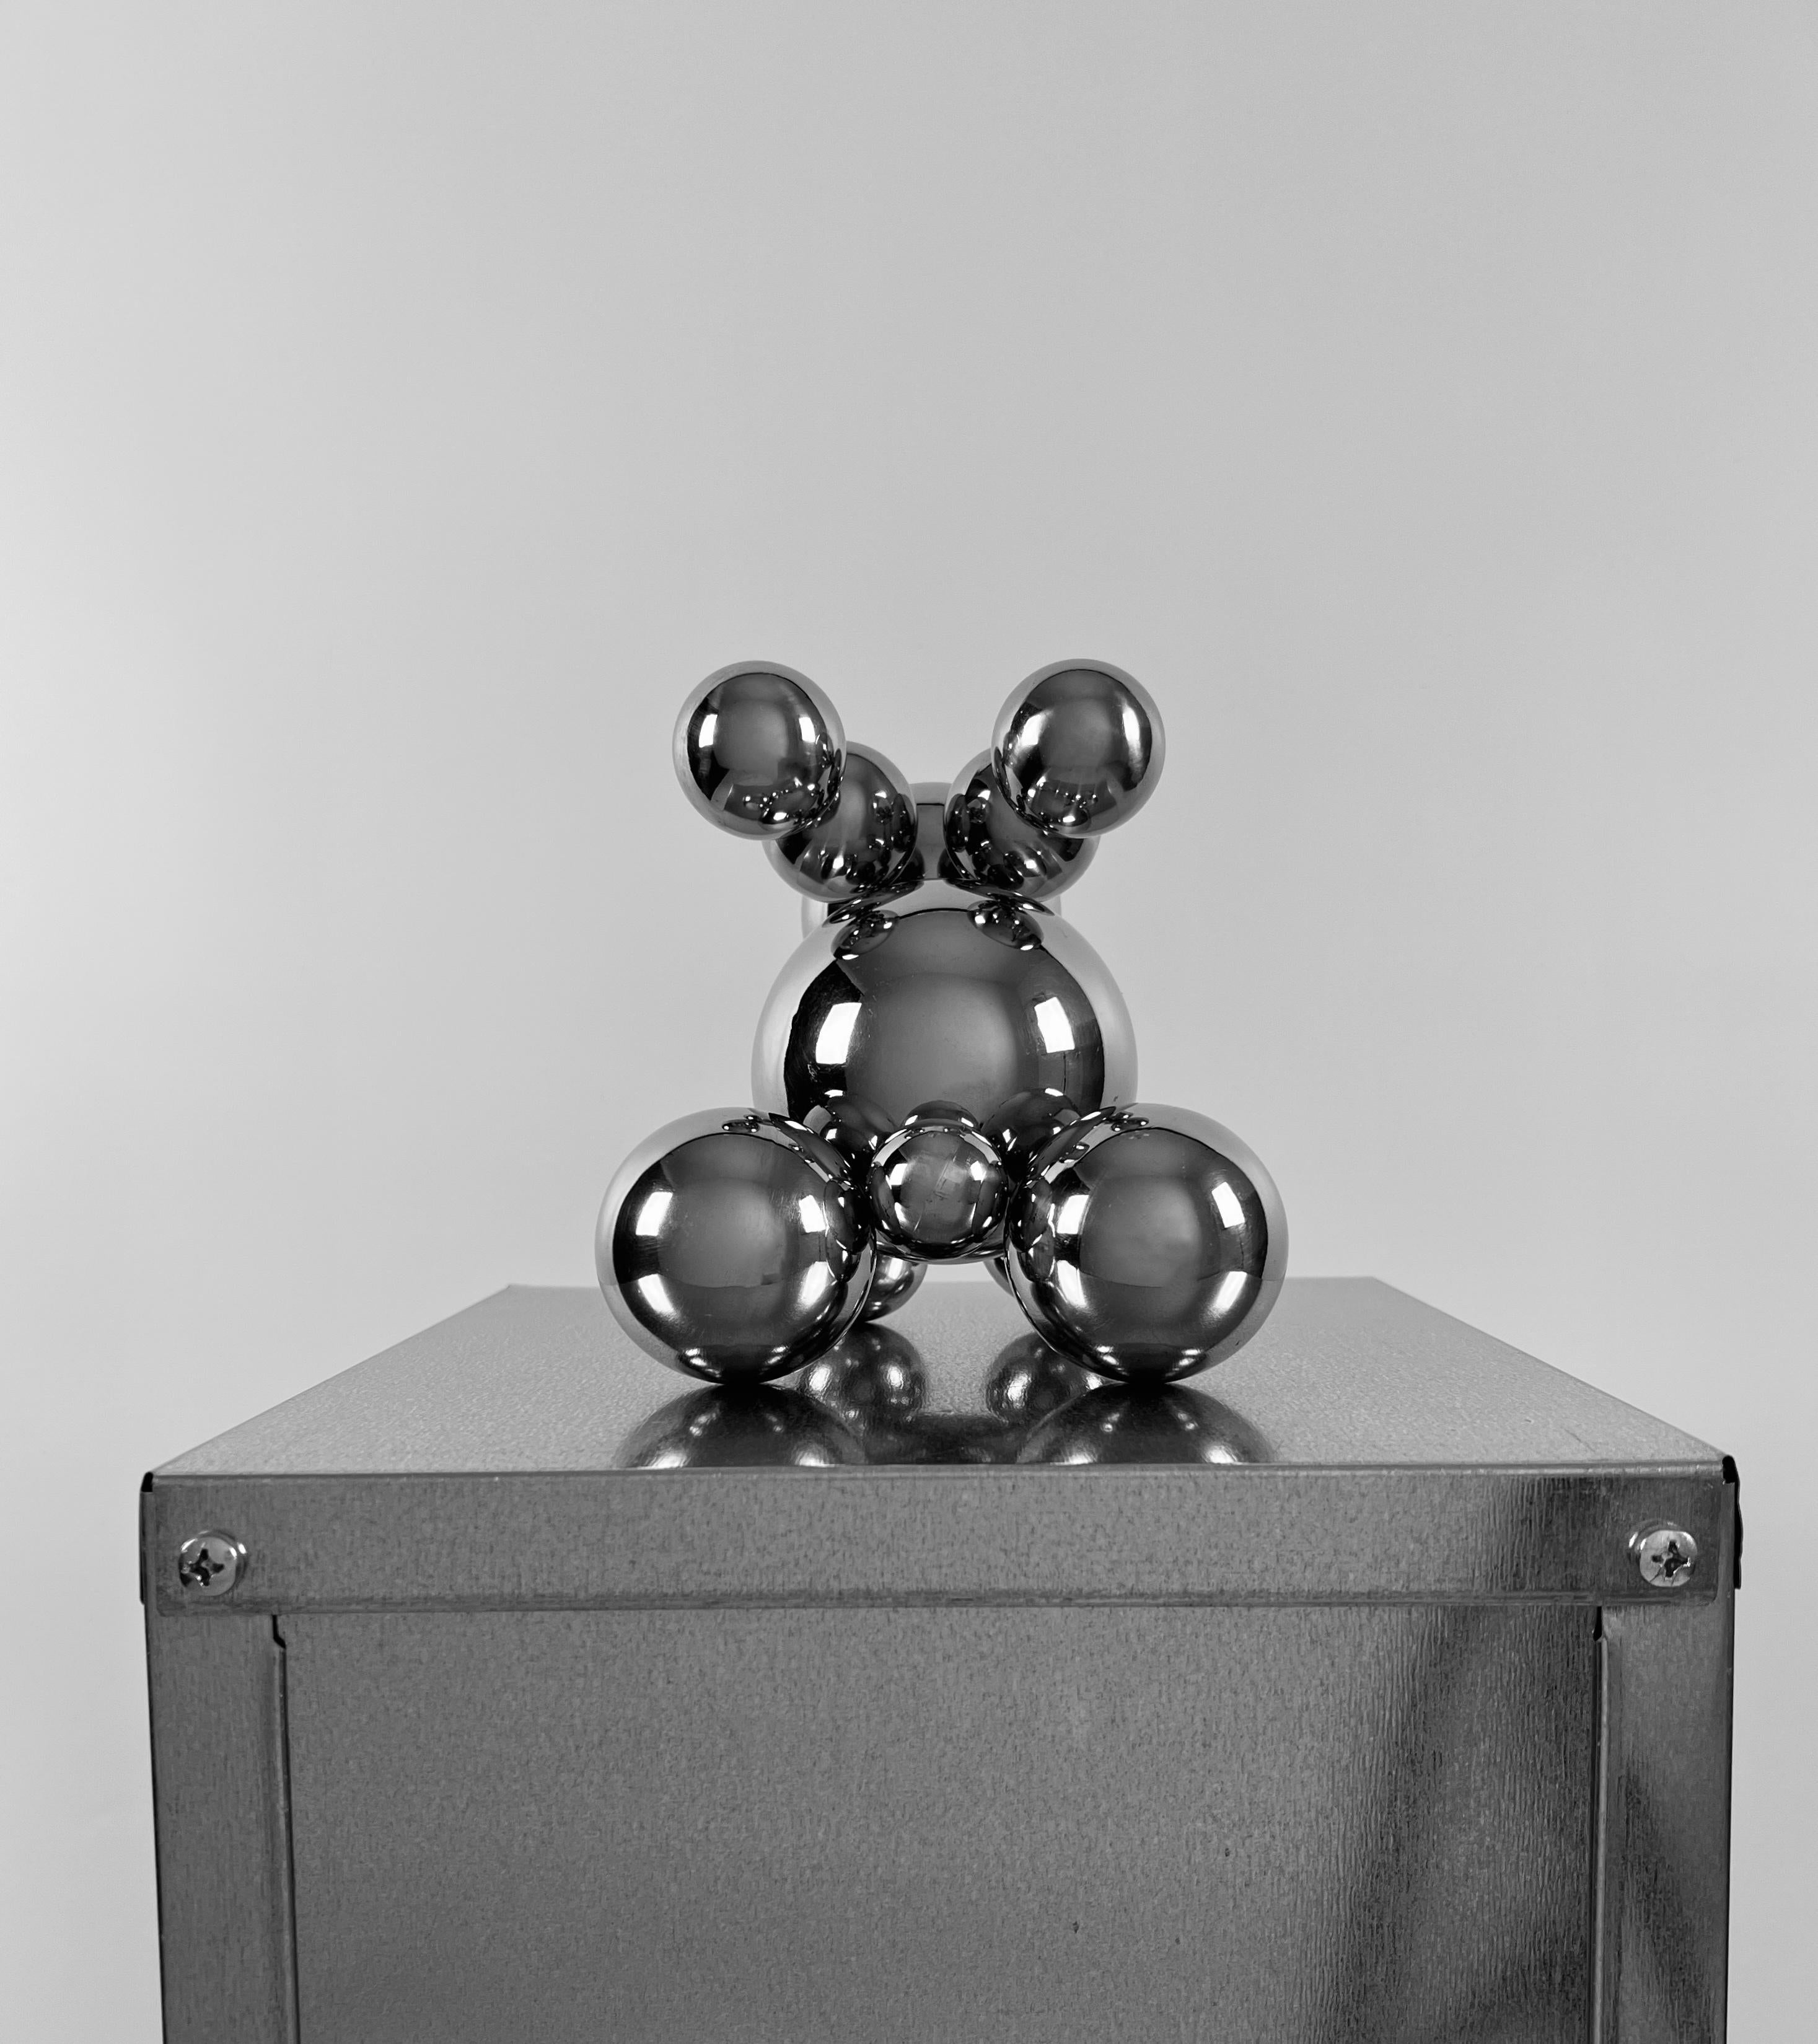 Stainless Steel Rabbit Robot Minimalistic Robot Sculpture 4